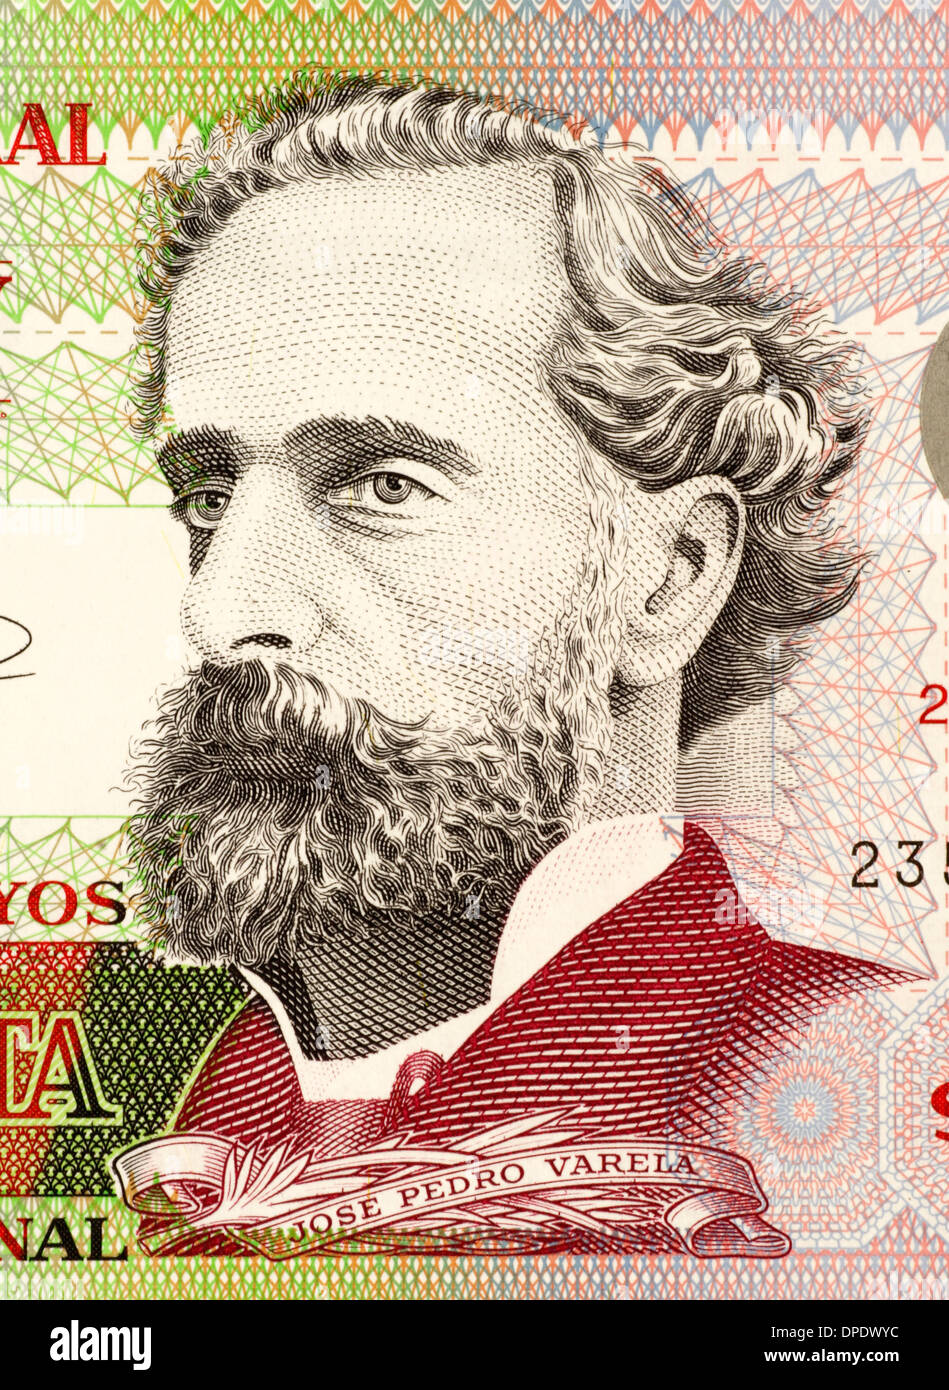 Jose Pedro Varela (1845-1879) on 50 Pesos 2008 Banknote from Uruguay. Uruguayan sociologist, journalist, politician & educator. Stock Photo